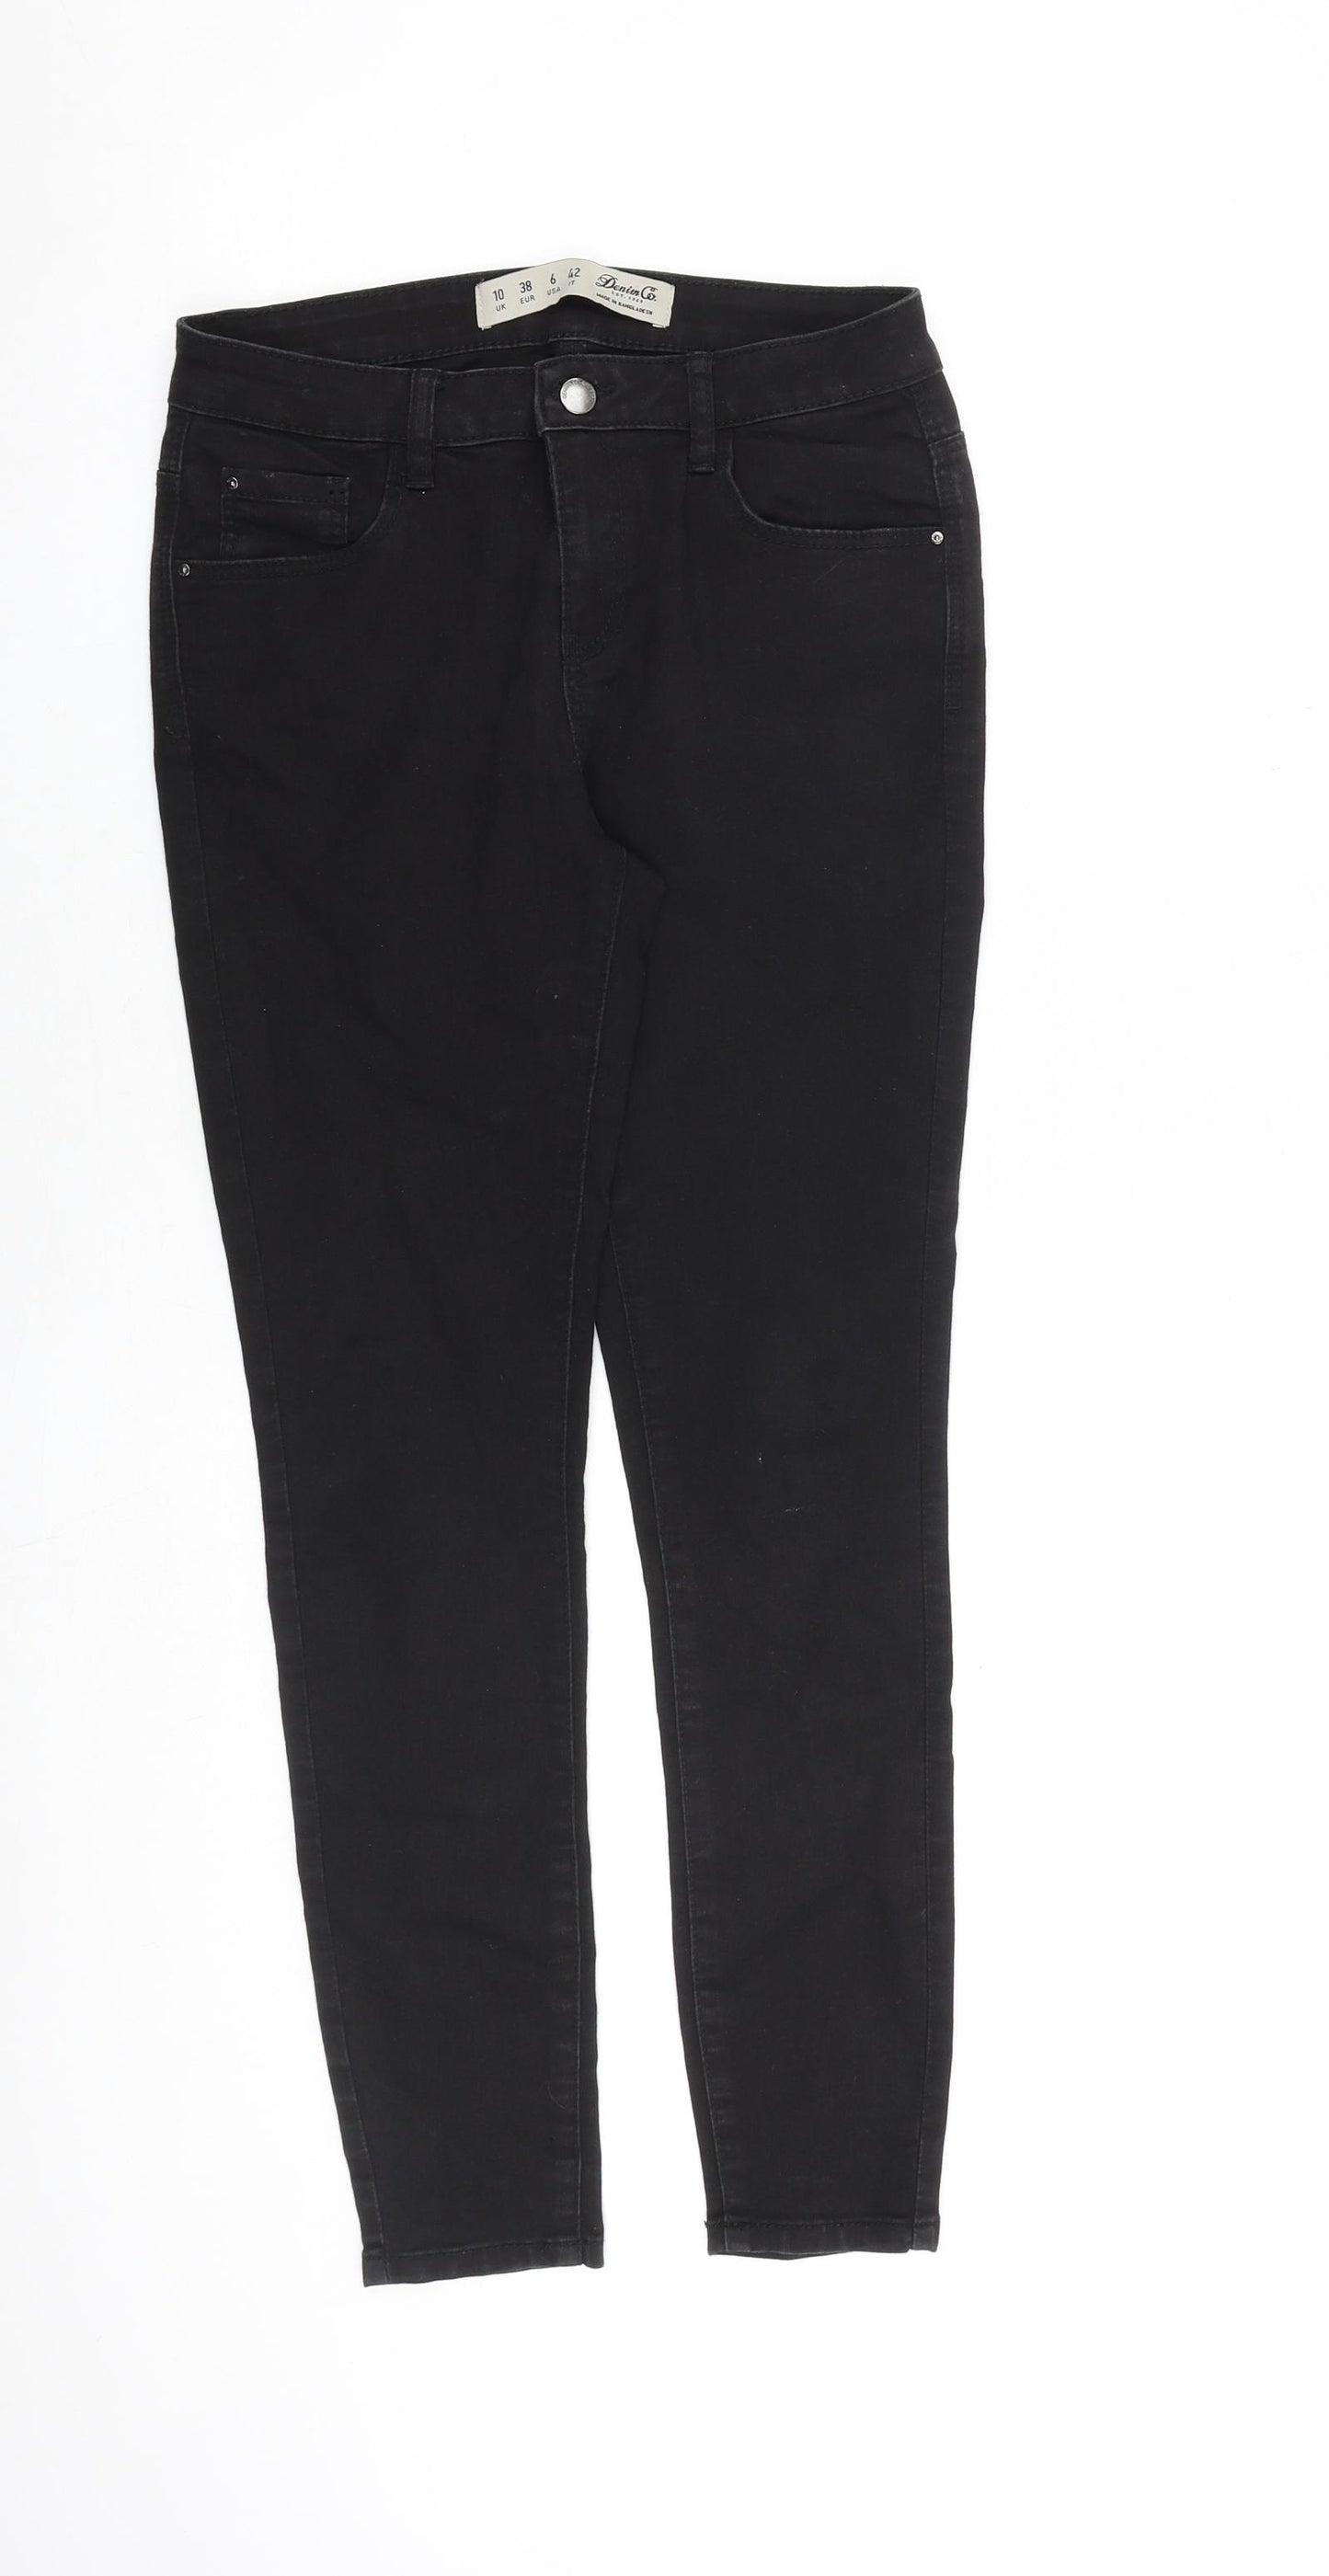 Denim & Co. Womens Black Cotton Skinny Jeans Size 10 L27 in Regular Zip